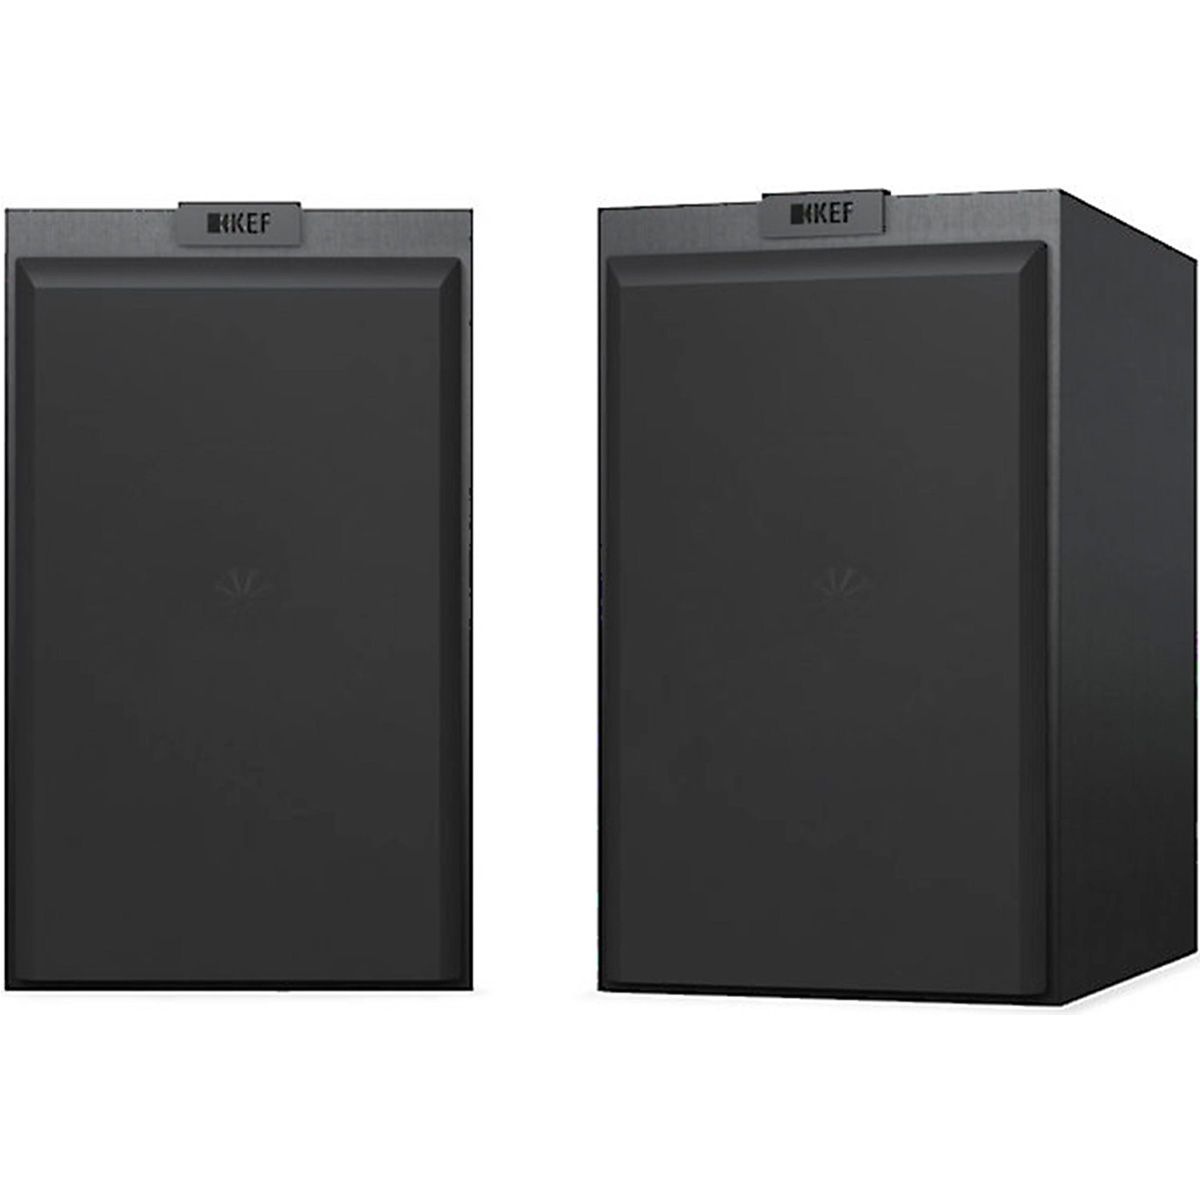 KEF Q150 Bookshelf Speakers - Black - Pair - front view of pair with grilles